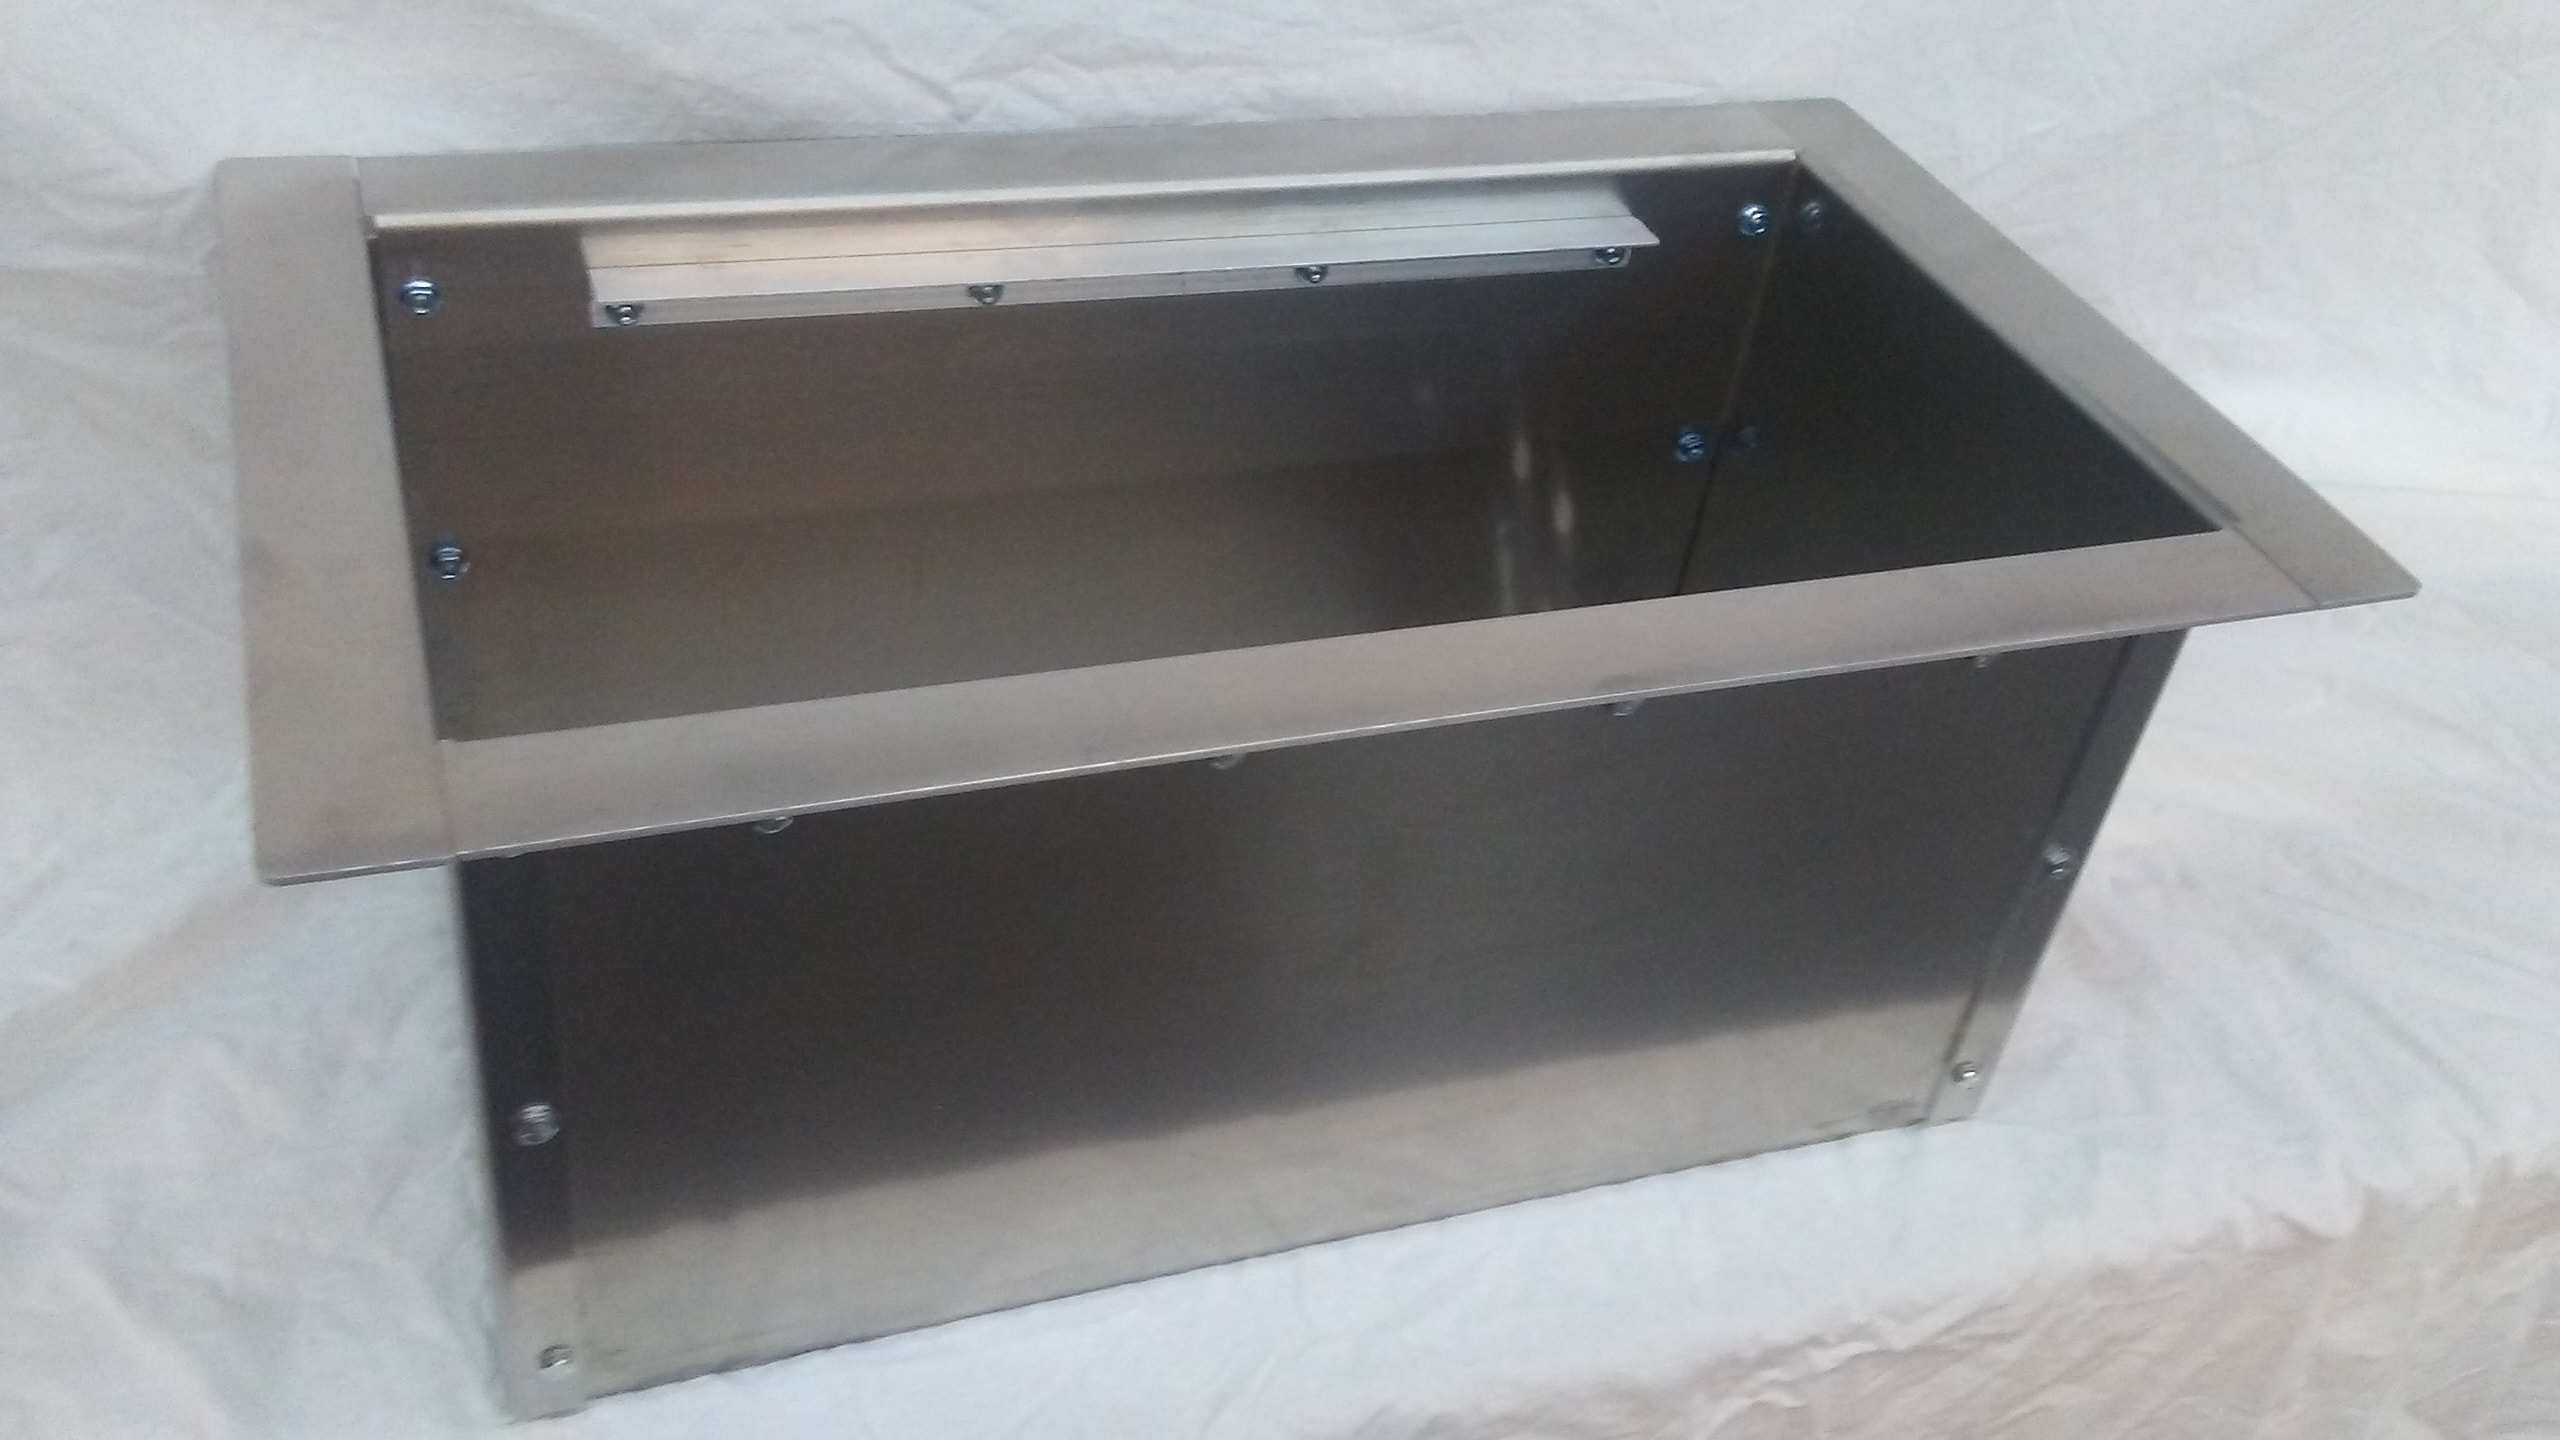 In floor storage box (Battery) Aluminum Finish or black